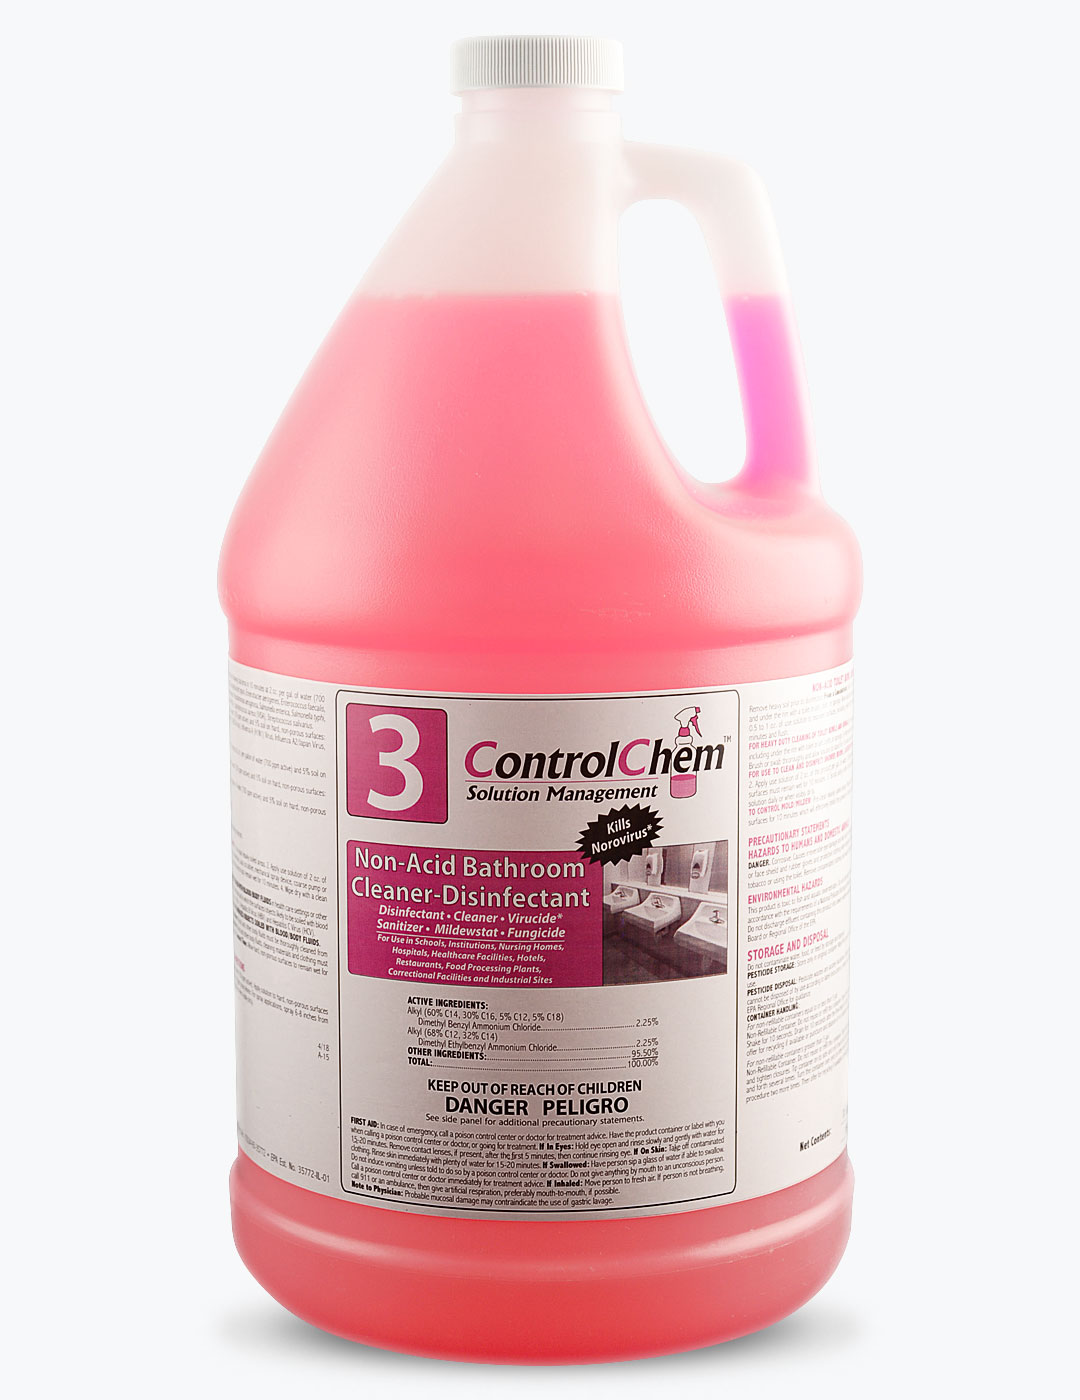 ControlChem #3 Non-Acid Bathroom Cleaner-Disinfectant